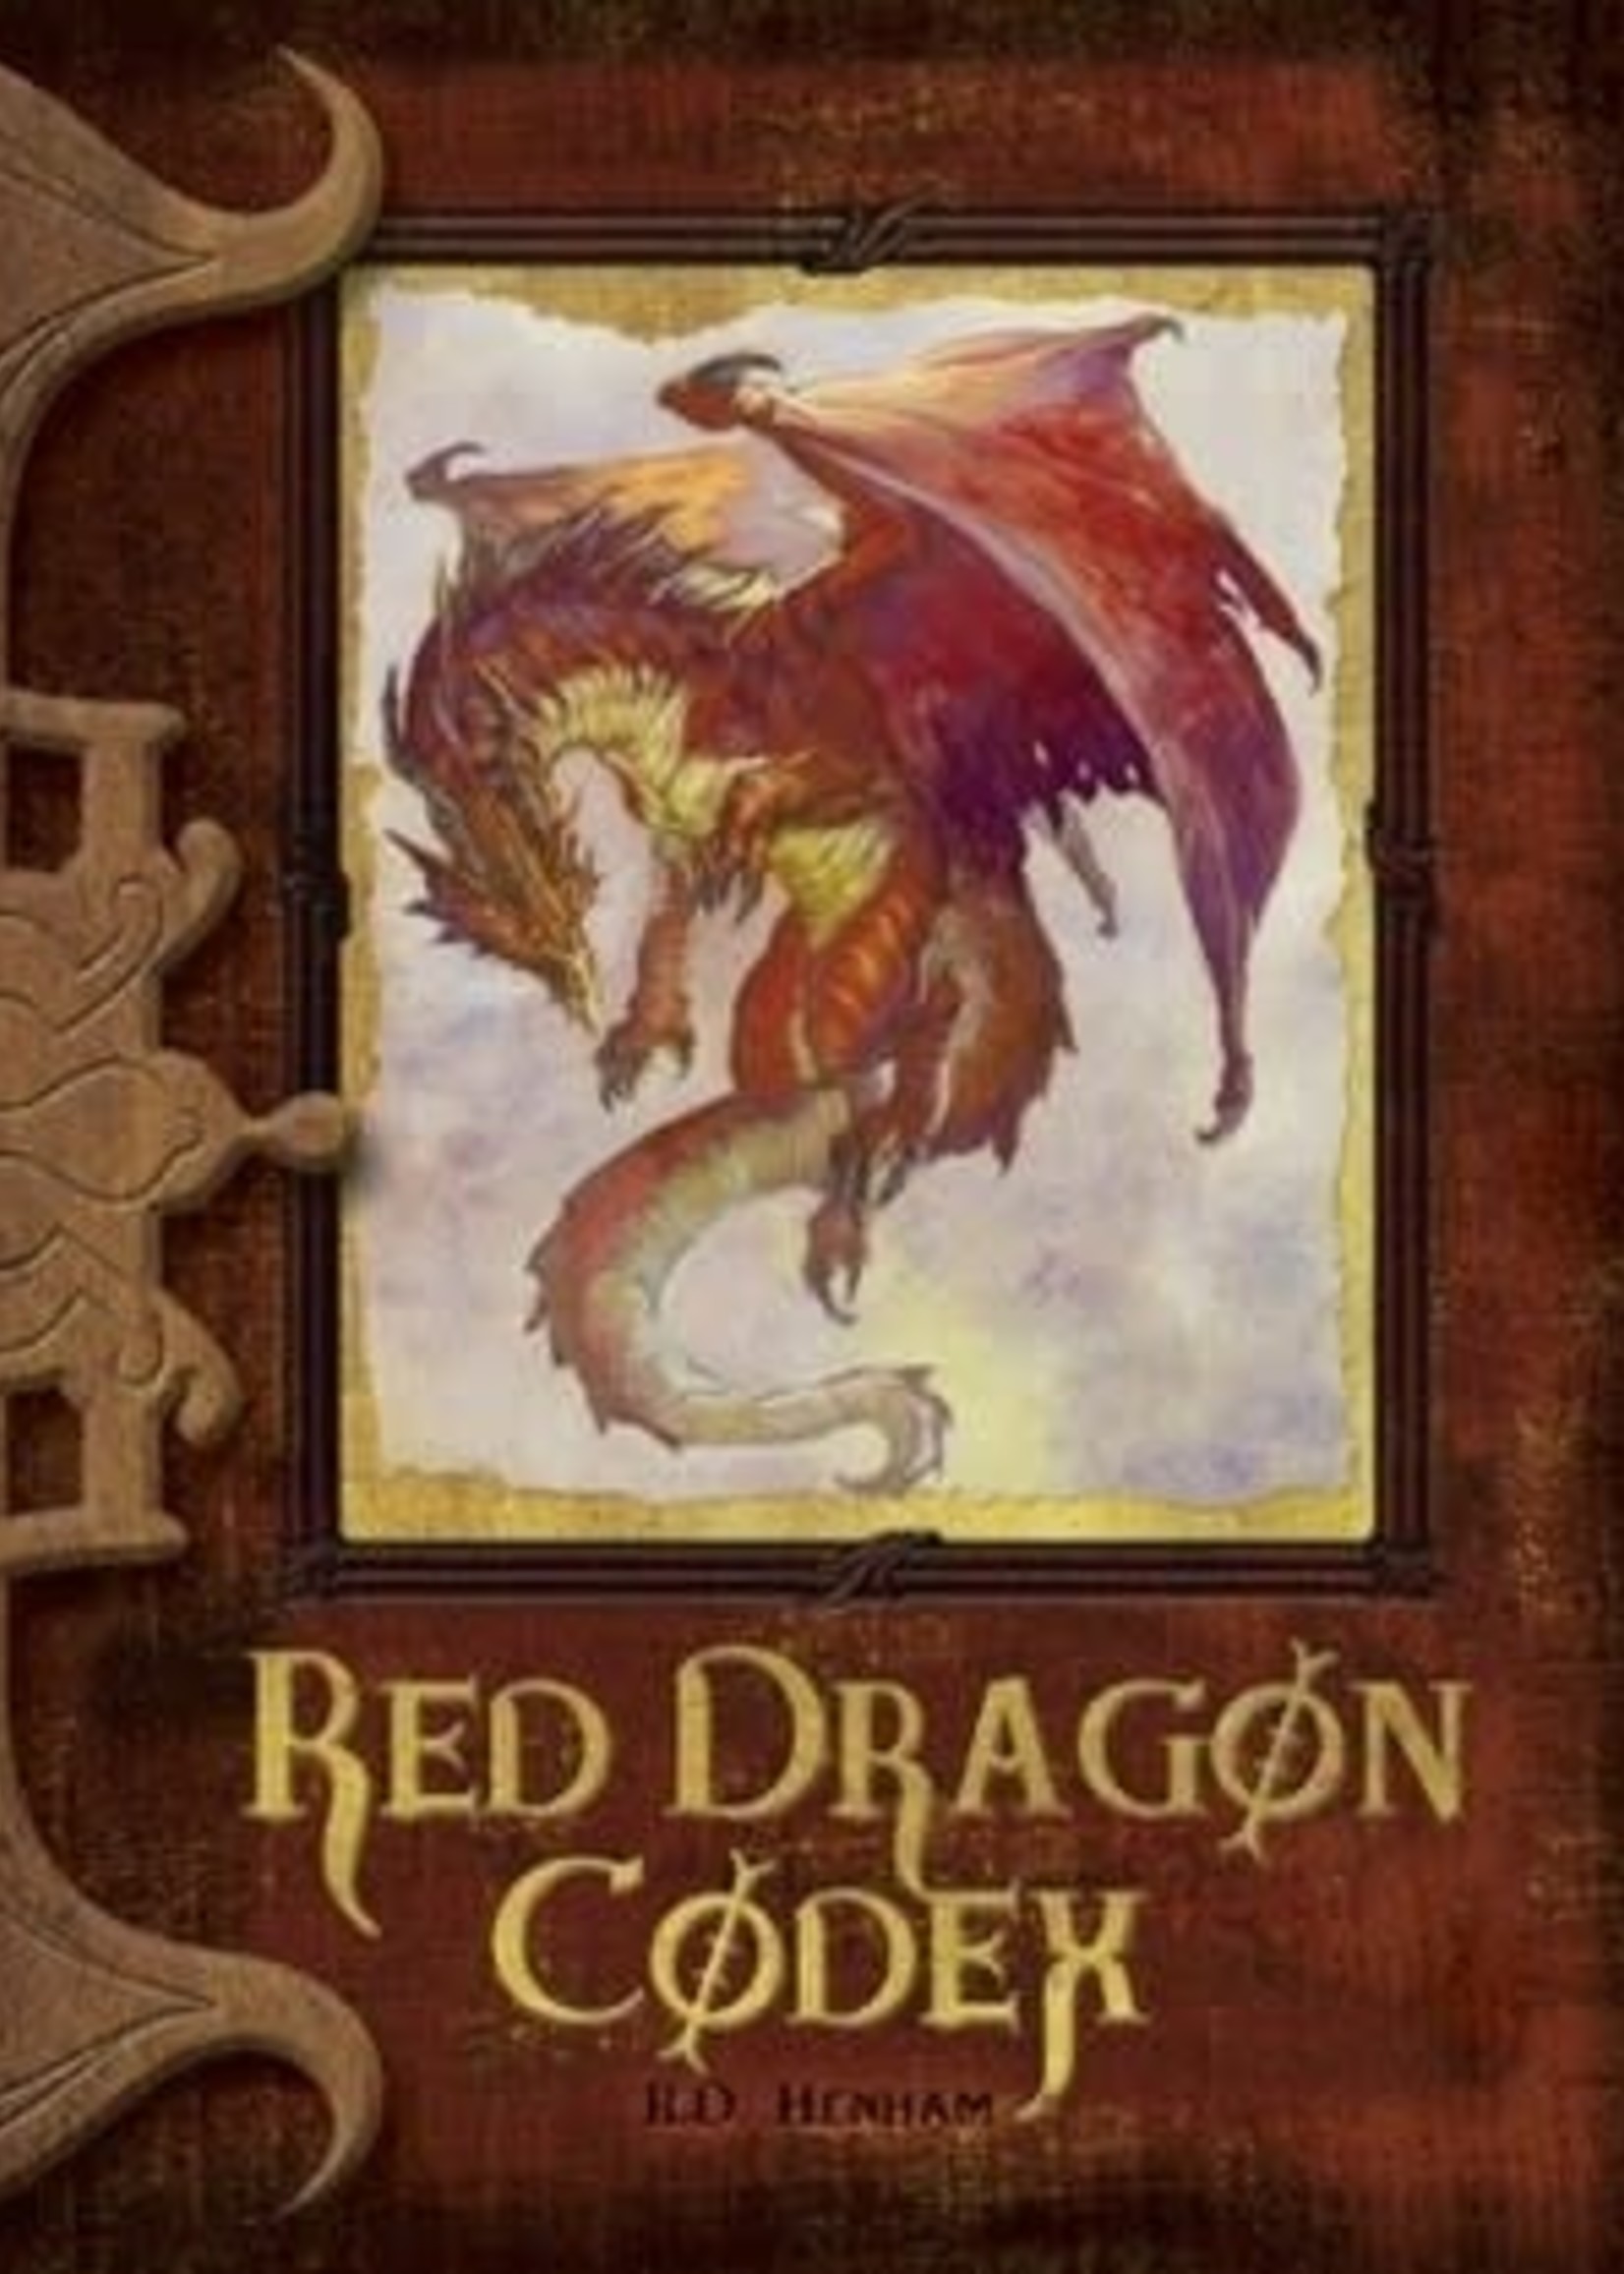 Red Dragon Codex (Dragon Codices #1) by R.D. Henham